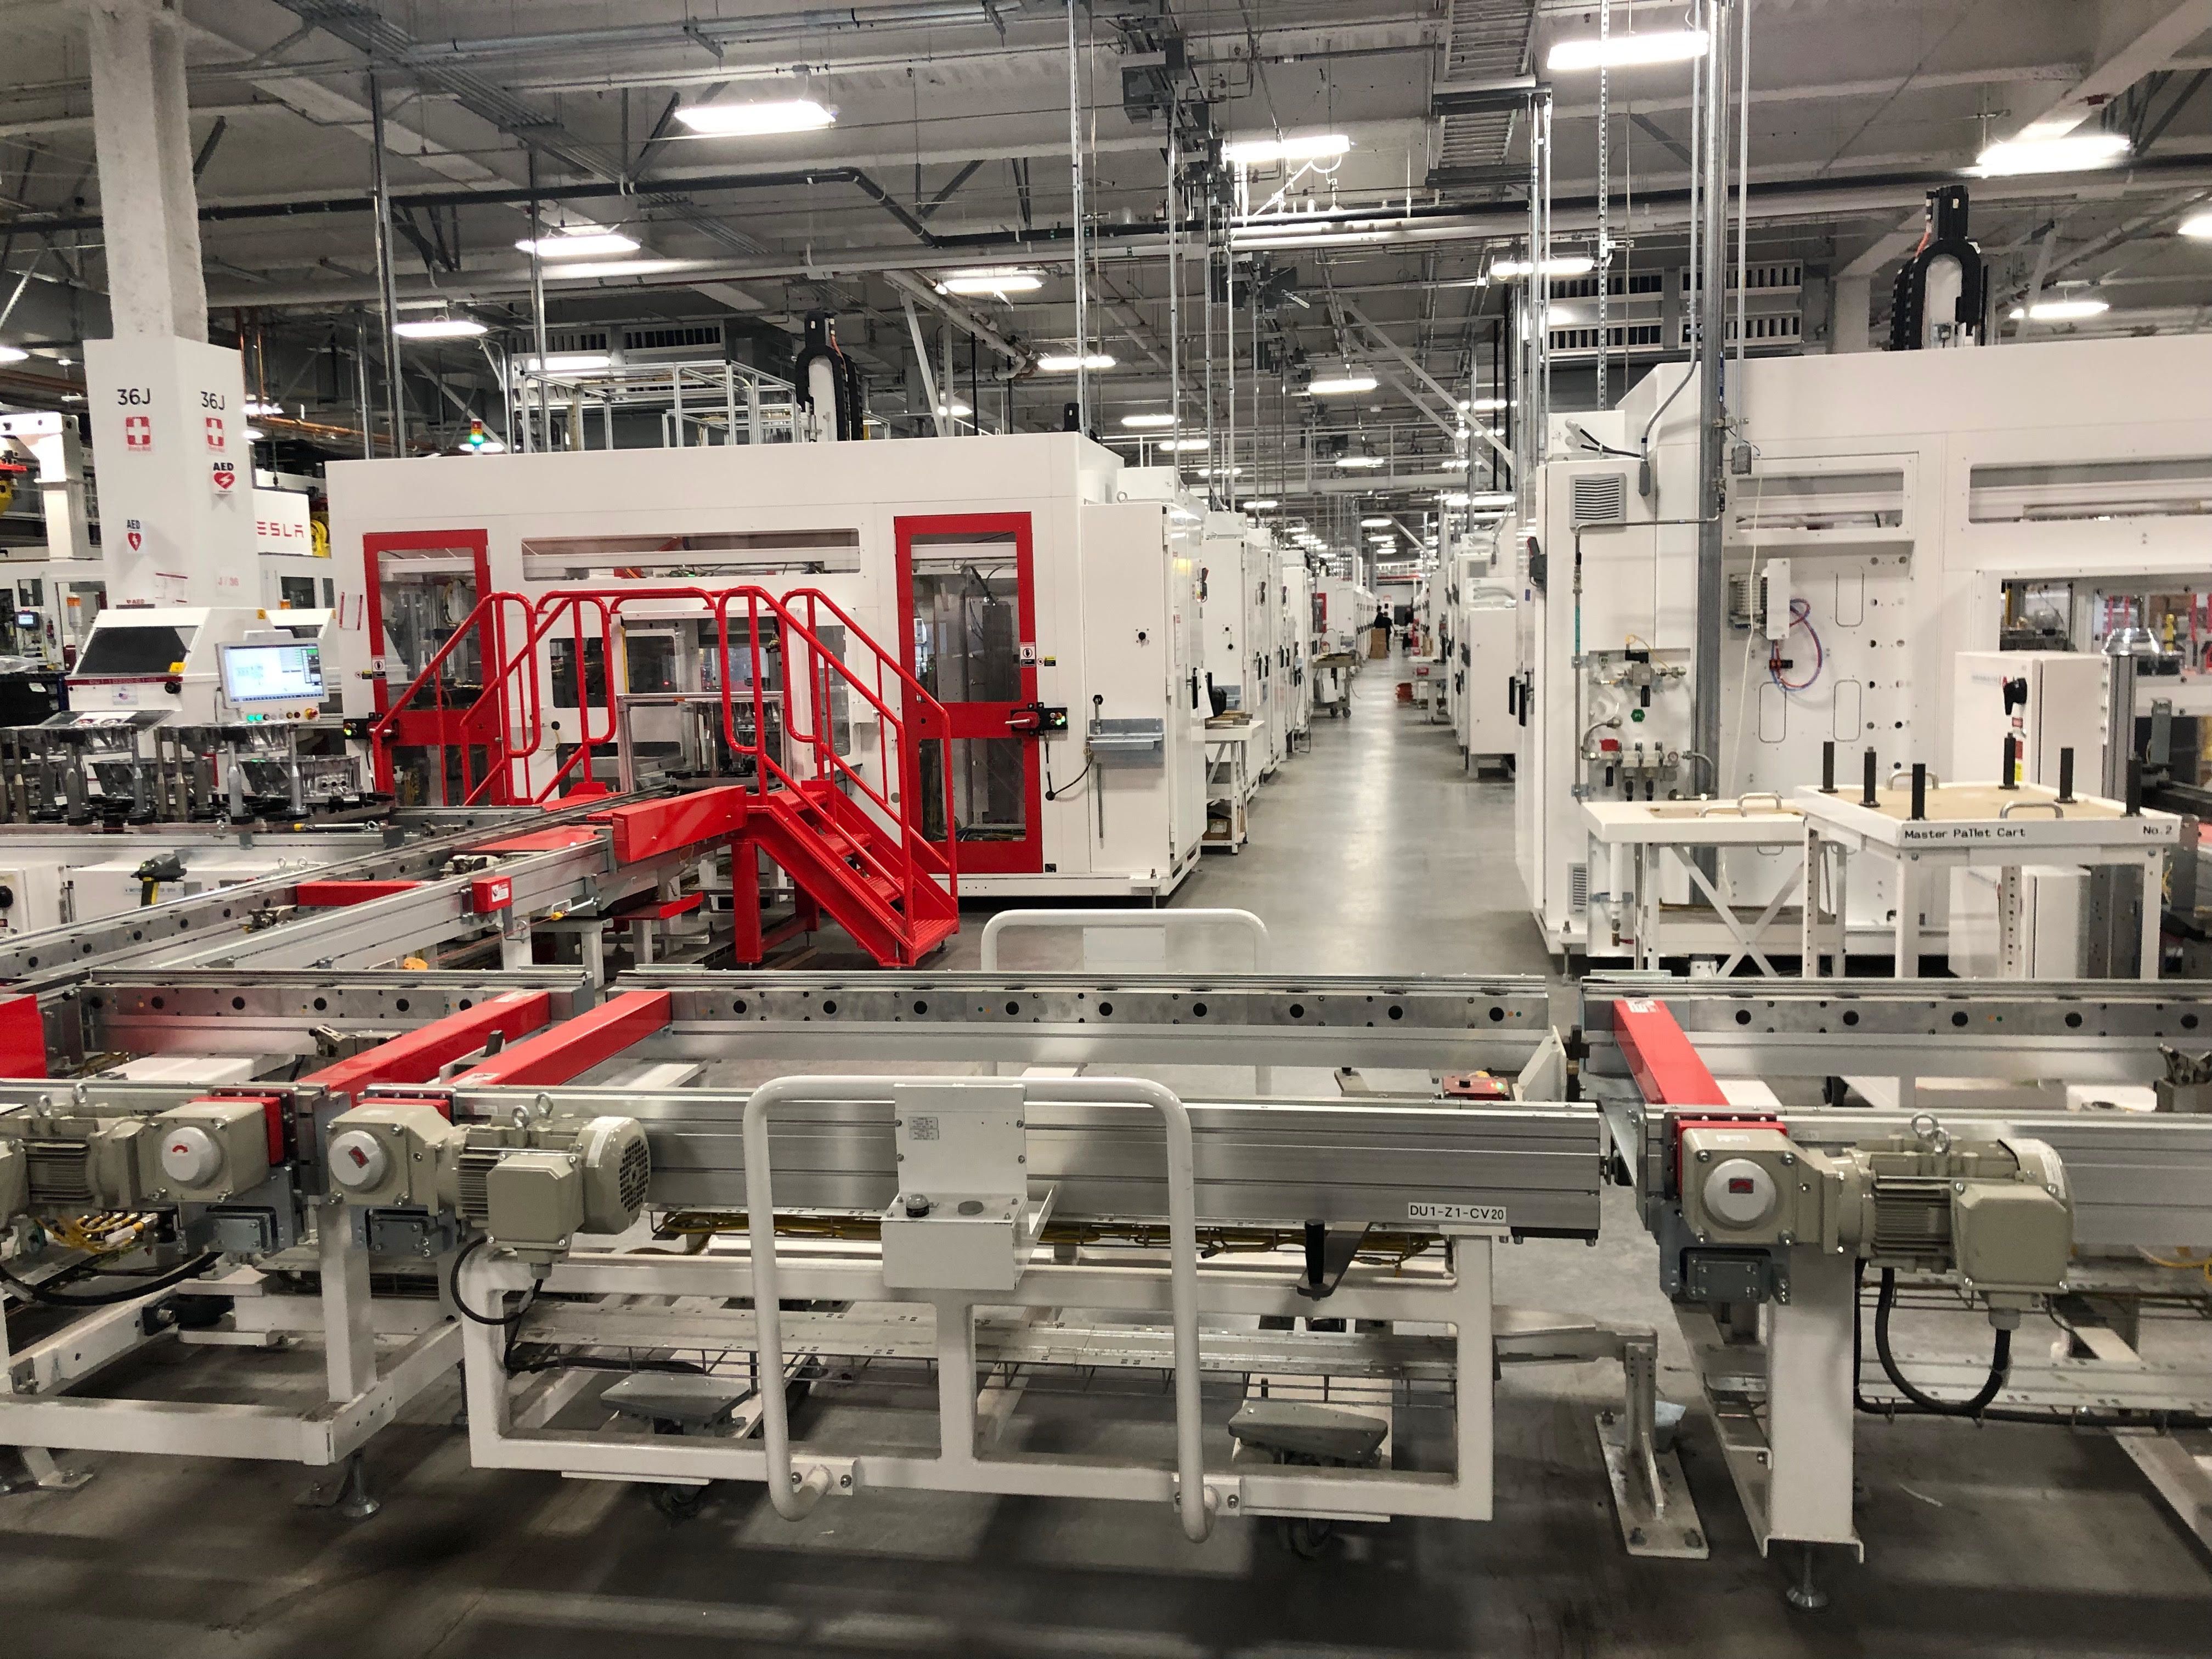 We went inside Tesla's Gigafactory. Here's what it looked like